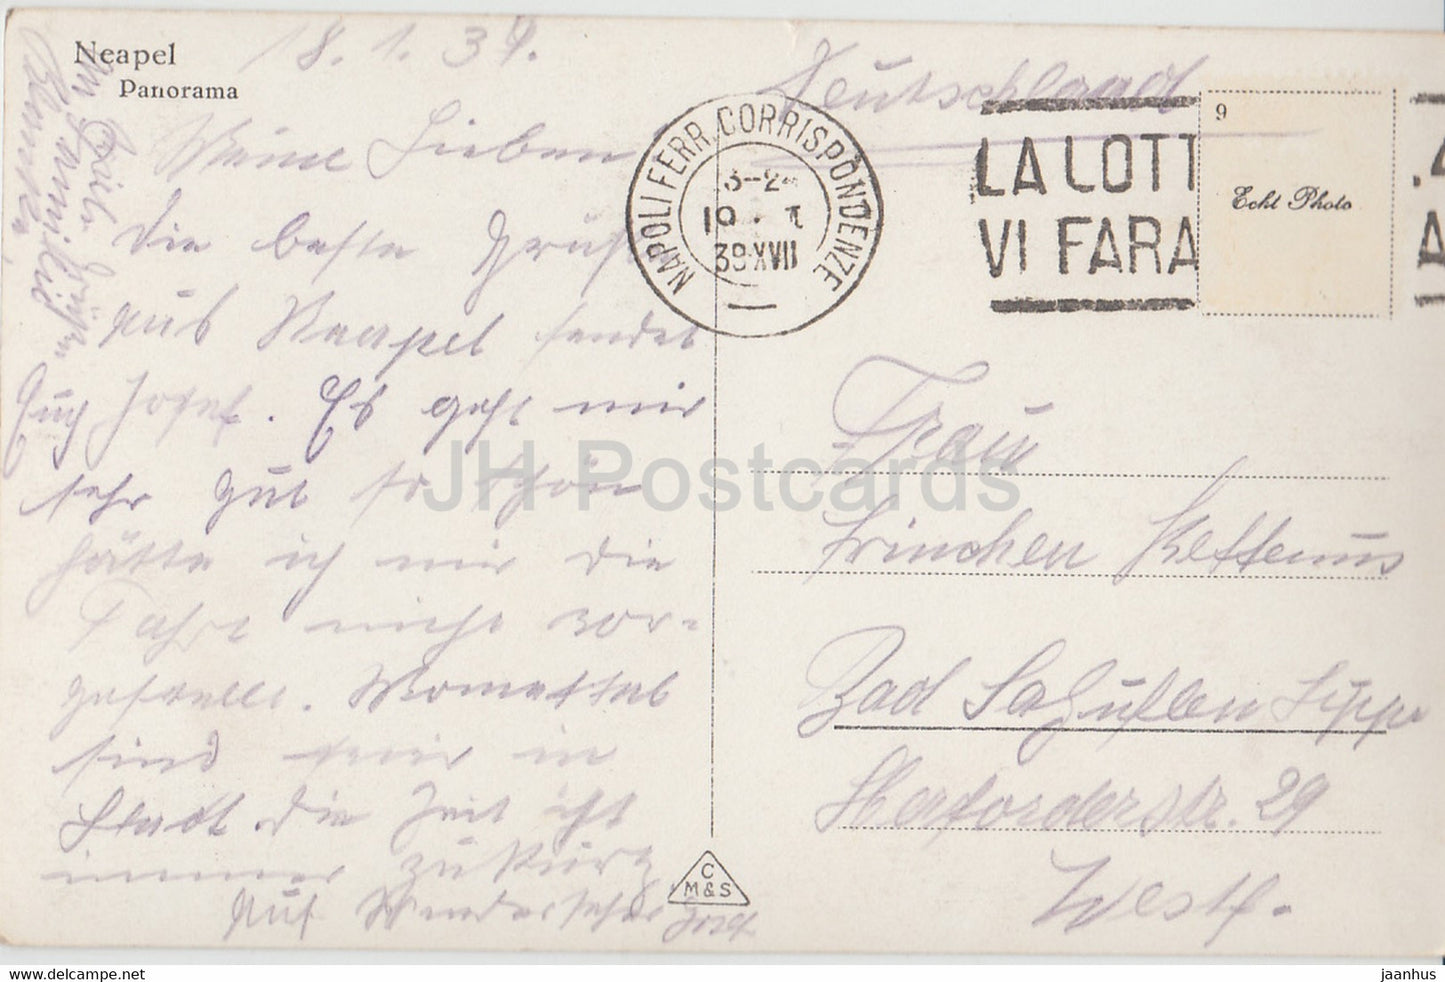 Neapel - Napoli - Panorama - 621 a - alte Postkarte - 1939 - Italien - gebraucht